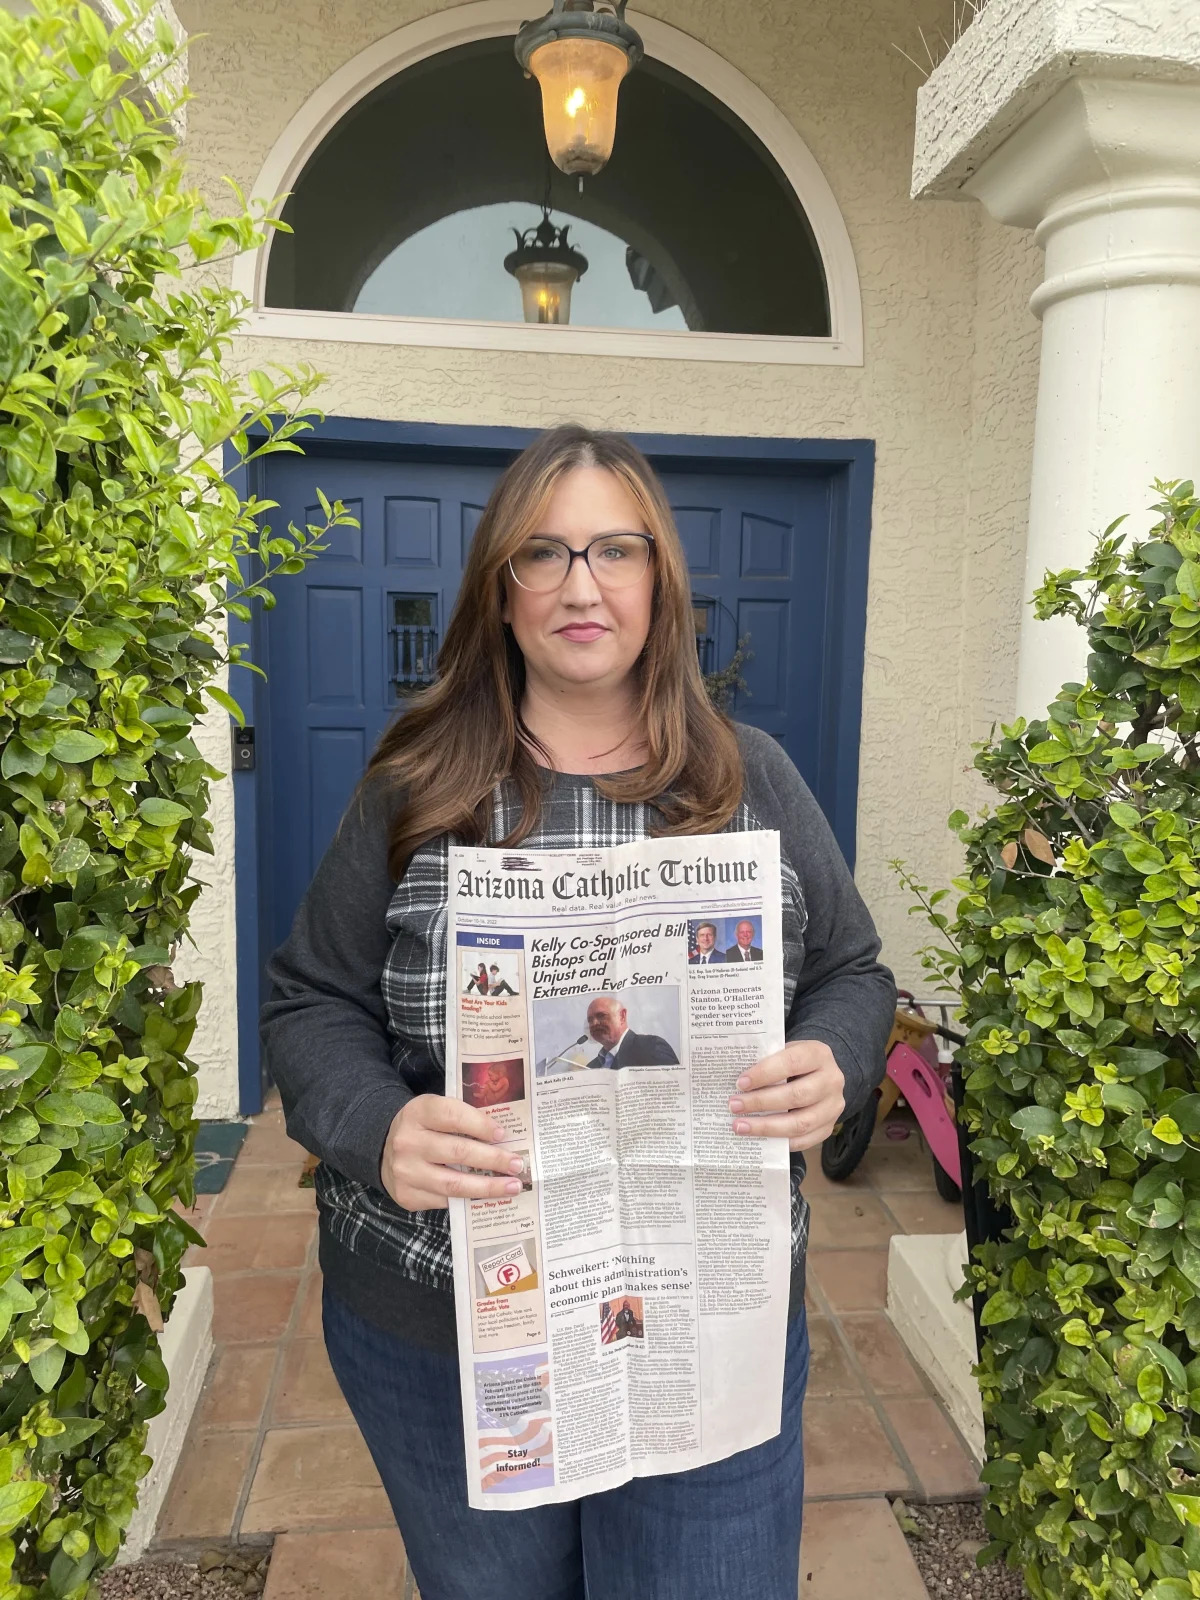 Partisan mailer poses as Catholic newspaper in Arizona